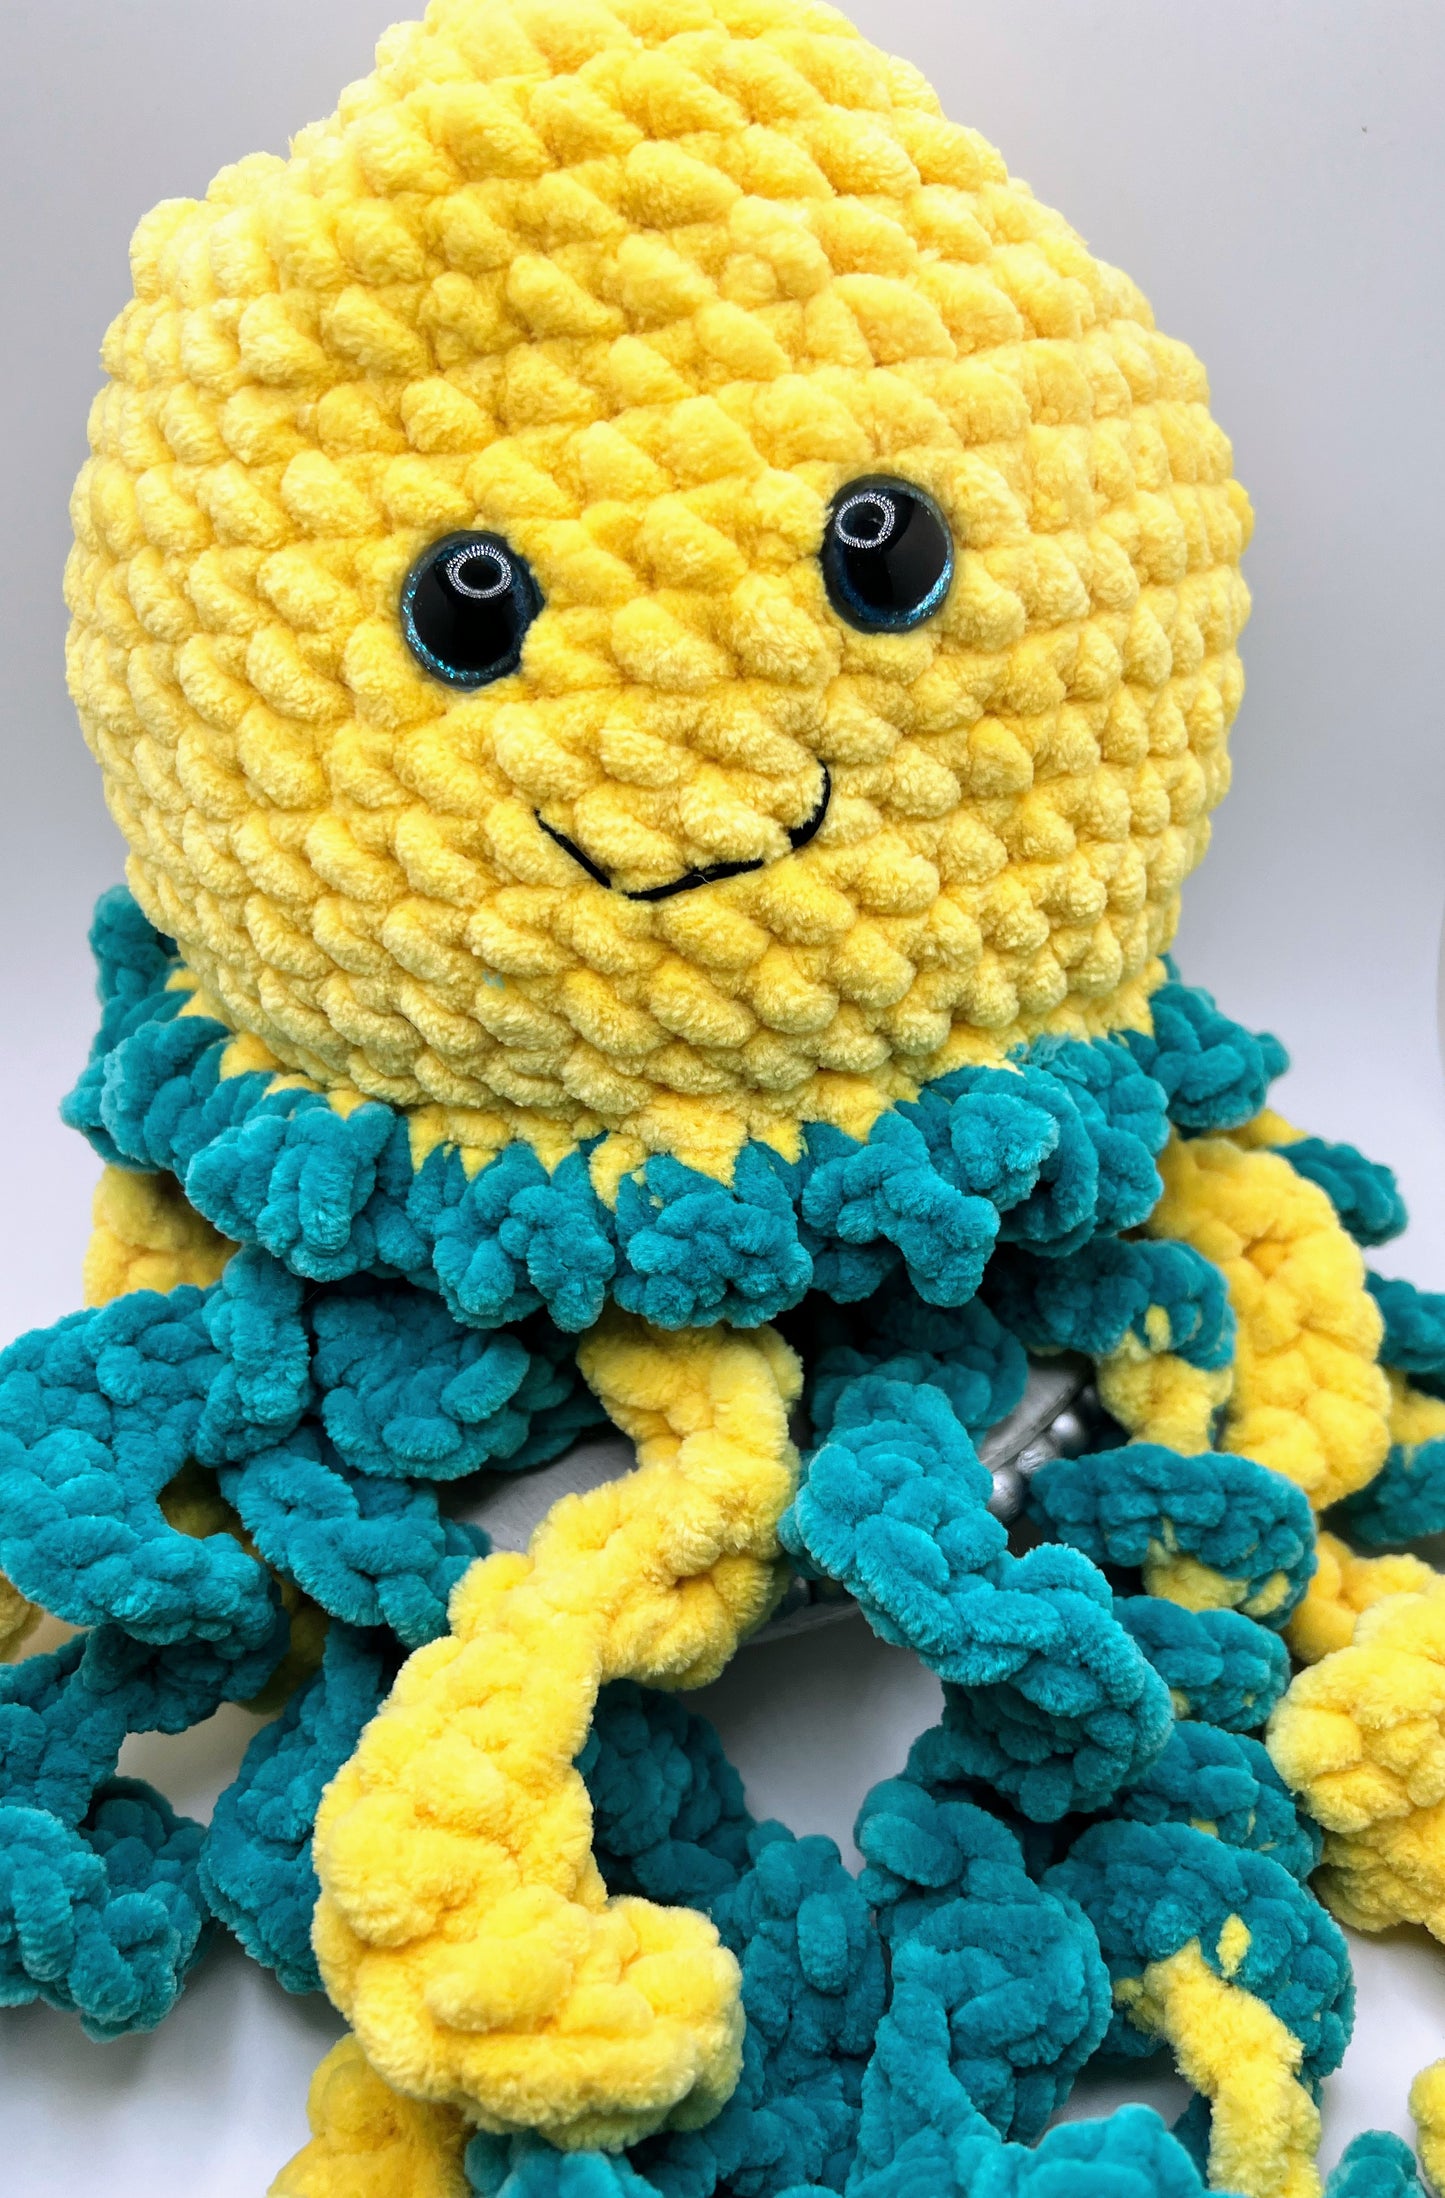 Stuffed Yellow Teal Big Jellyfish - Crochet Knitted Amigurumi Toy